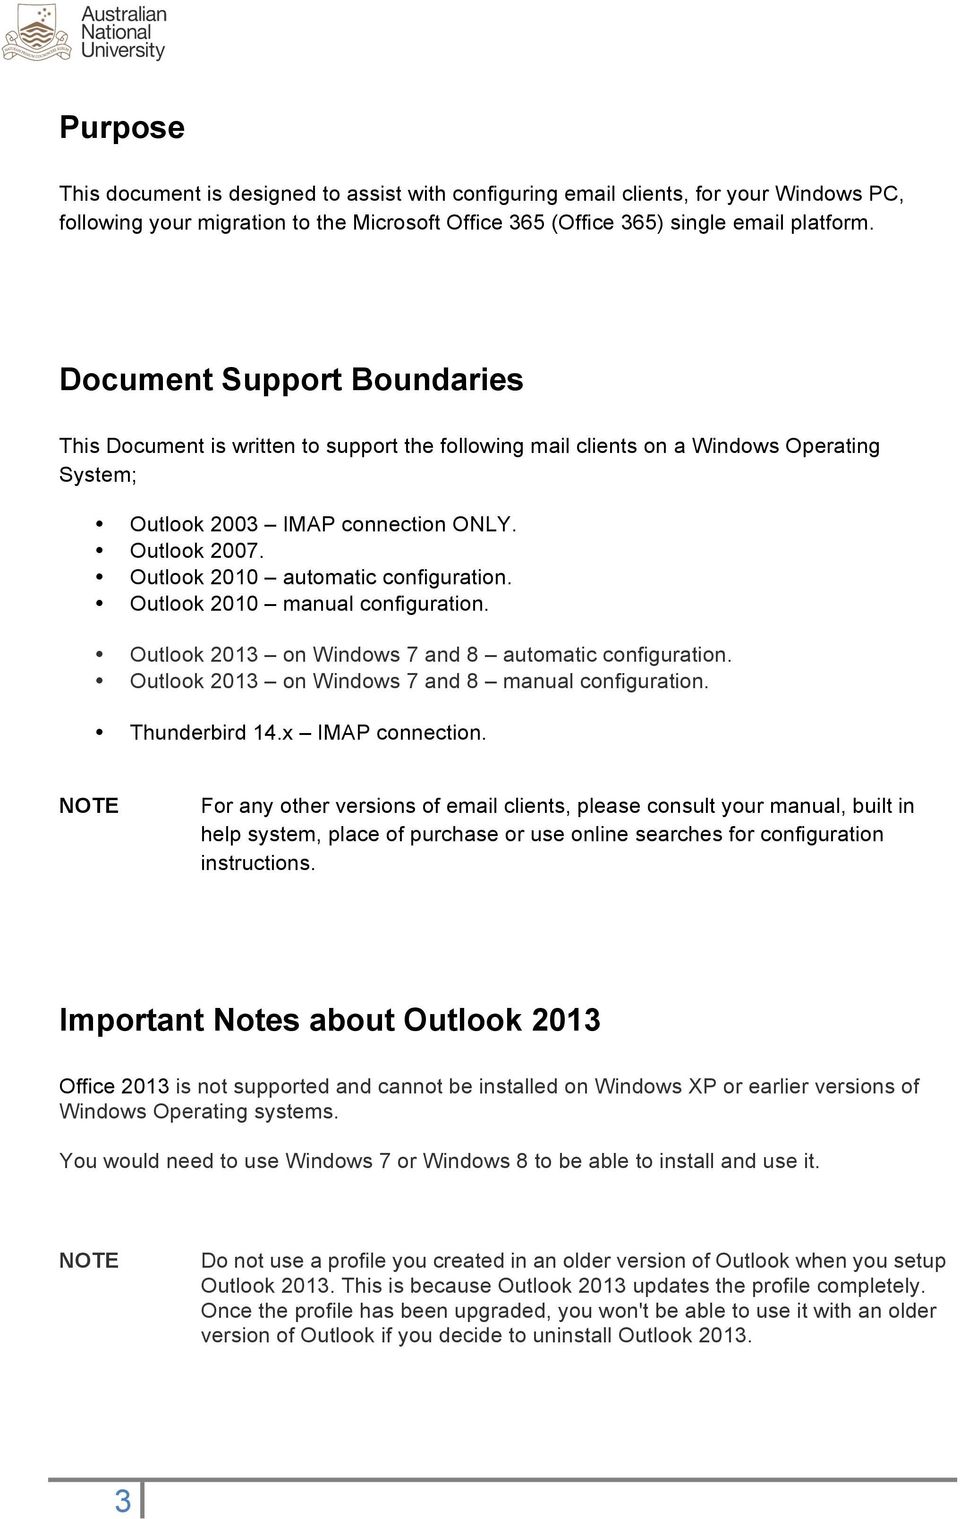 Outlook 2010 automatic configuration. Outlook 2010 manual configuration. Outlook 2013 on Windows 7 and 8 automatic configuration. Outlook 2013 on Windows 7 and 8 manual configuration. Thunderbird 14.